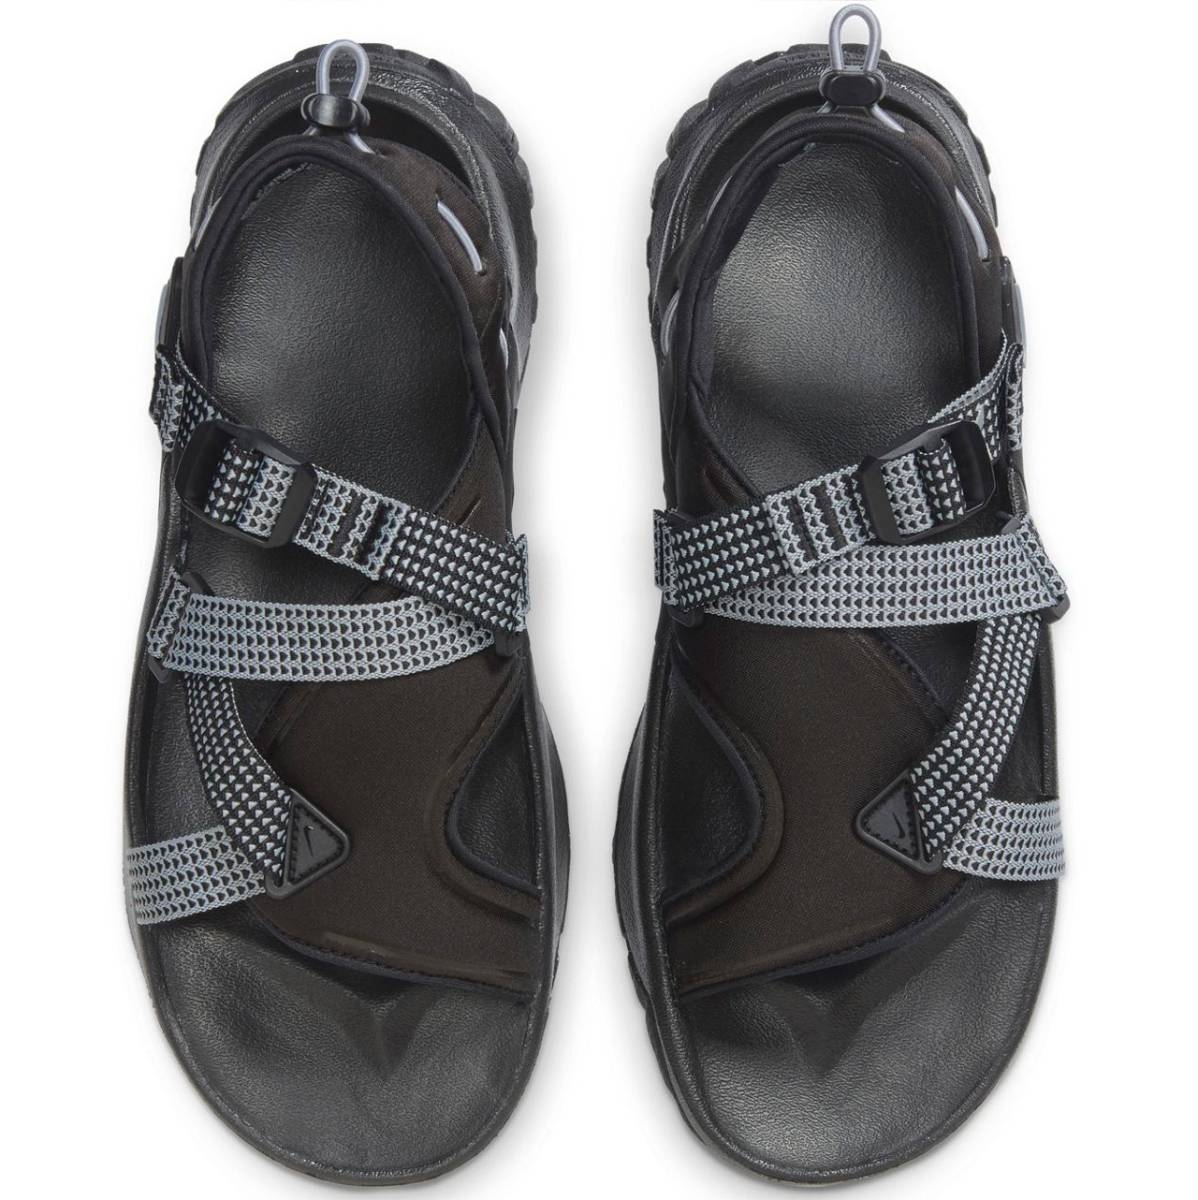 # Nike oni on ta sandals black / gray new goods 29.0cm US11 NIKE ONEONTA SANDALo neon ta outdoor DJ6603-001